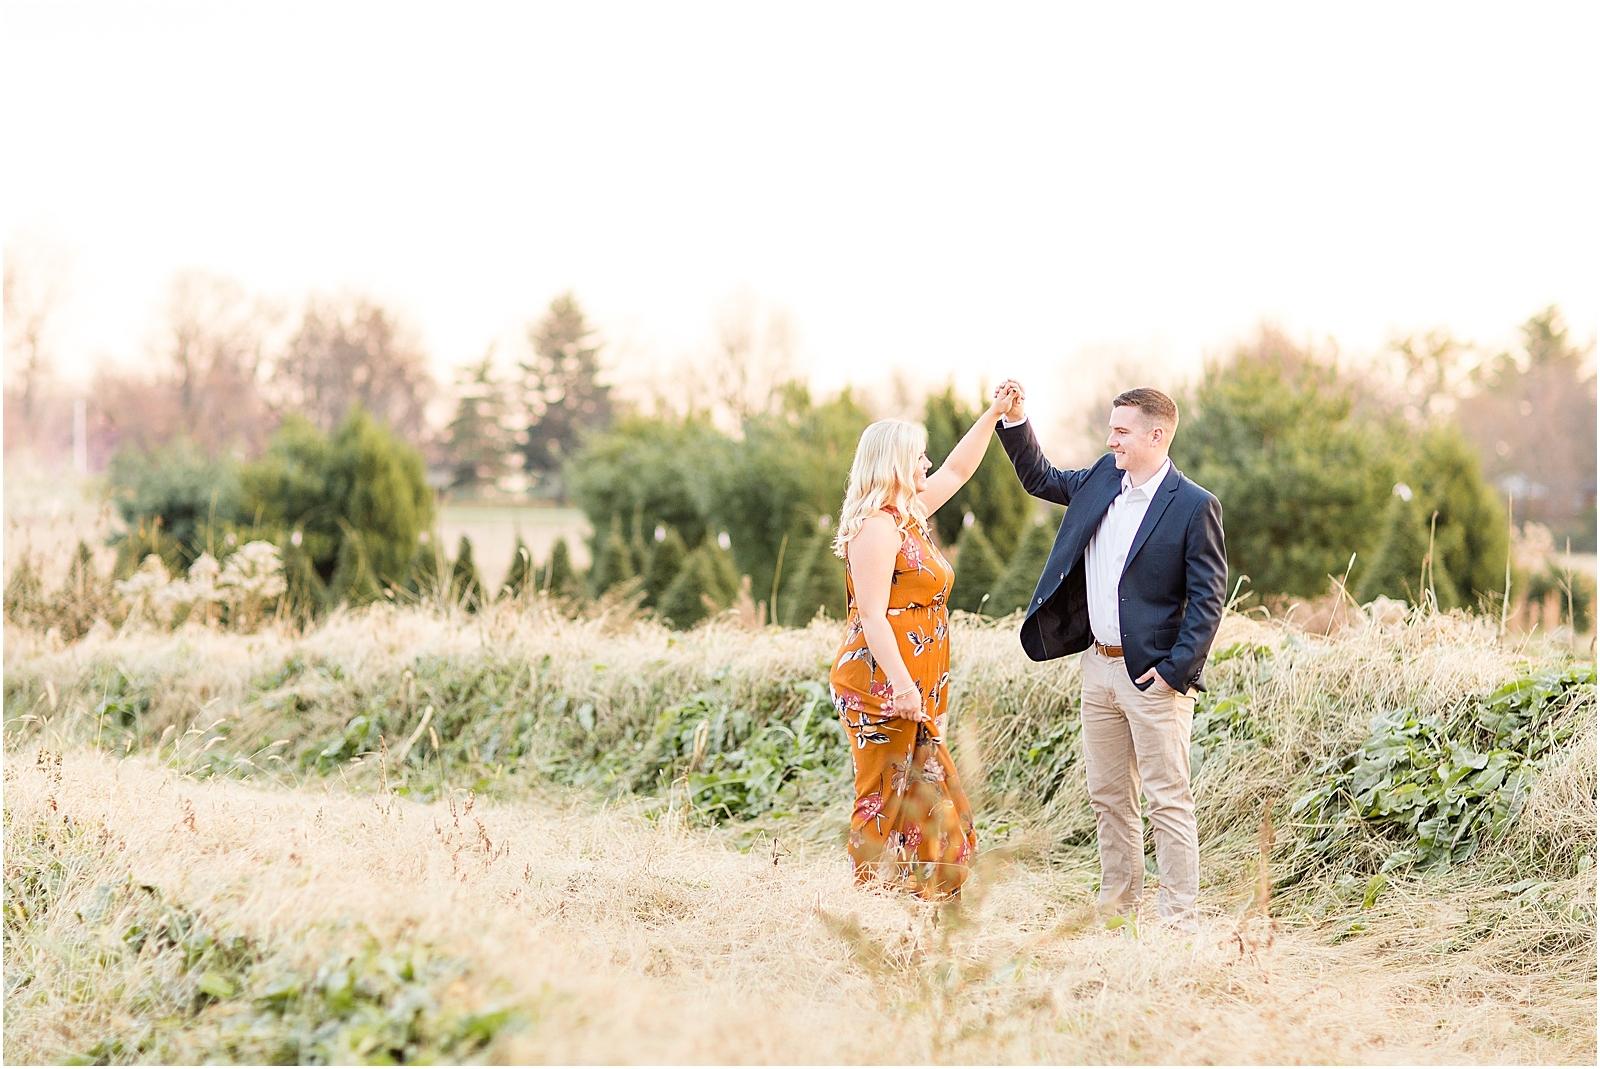 Haylee and Dillon | Evansville Wedding Photographer0021.jpg